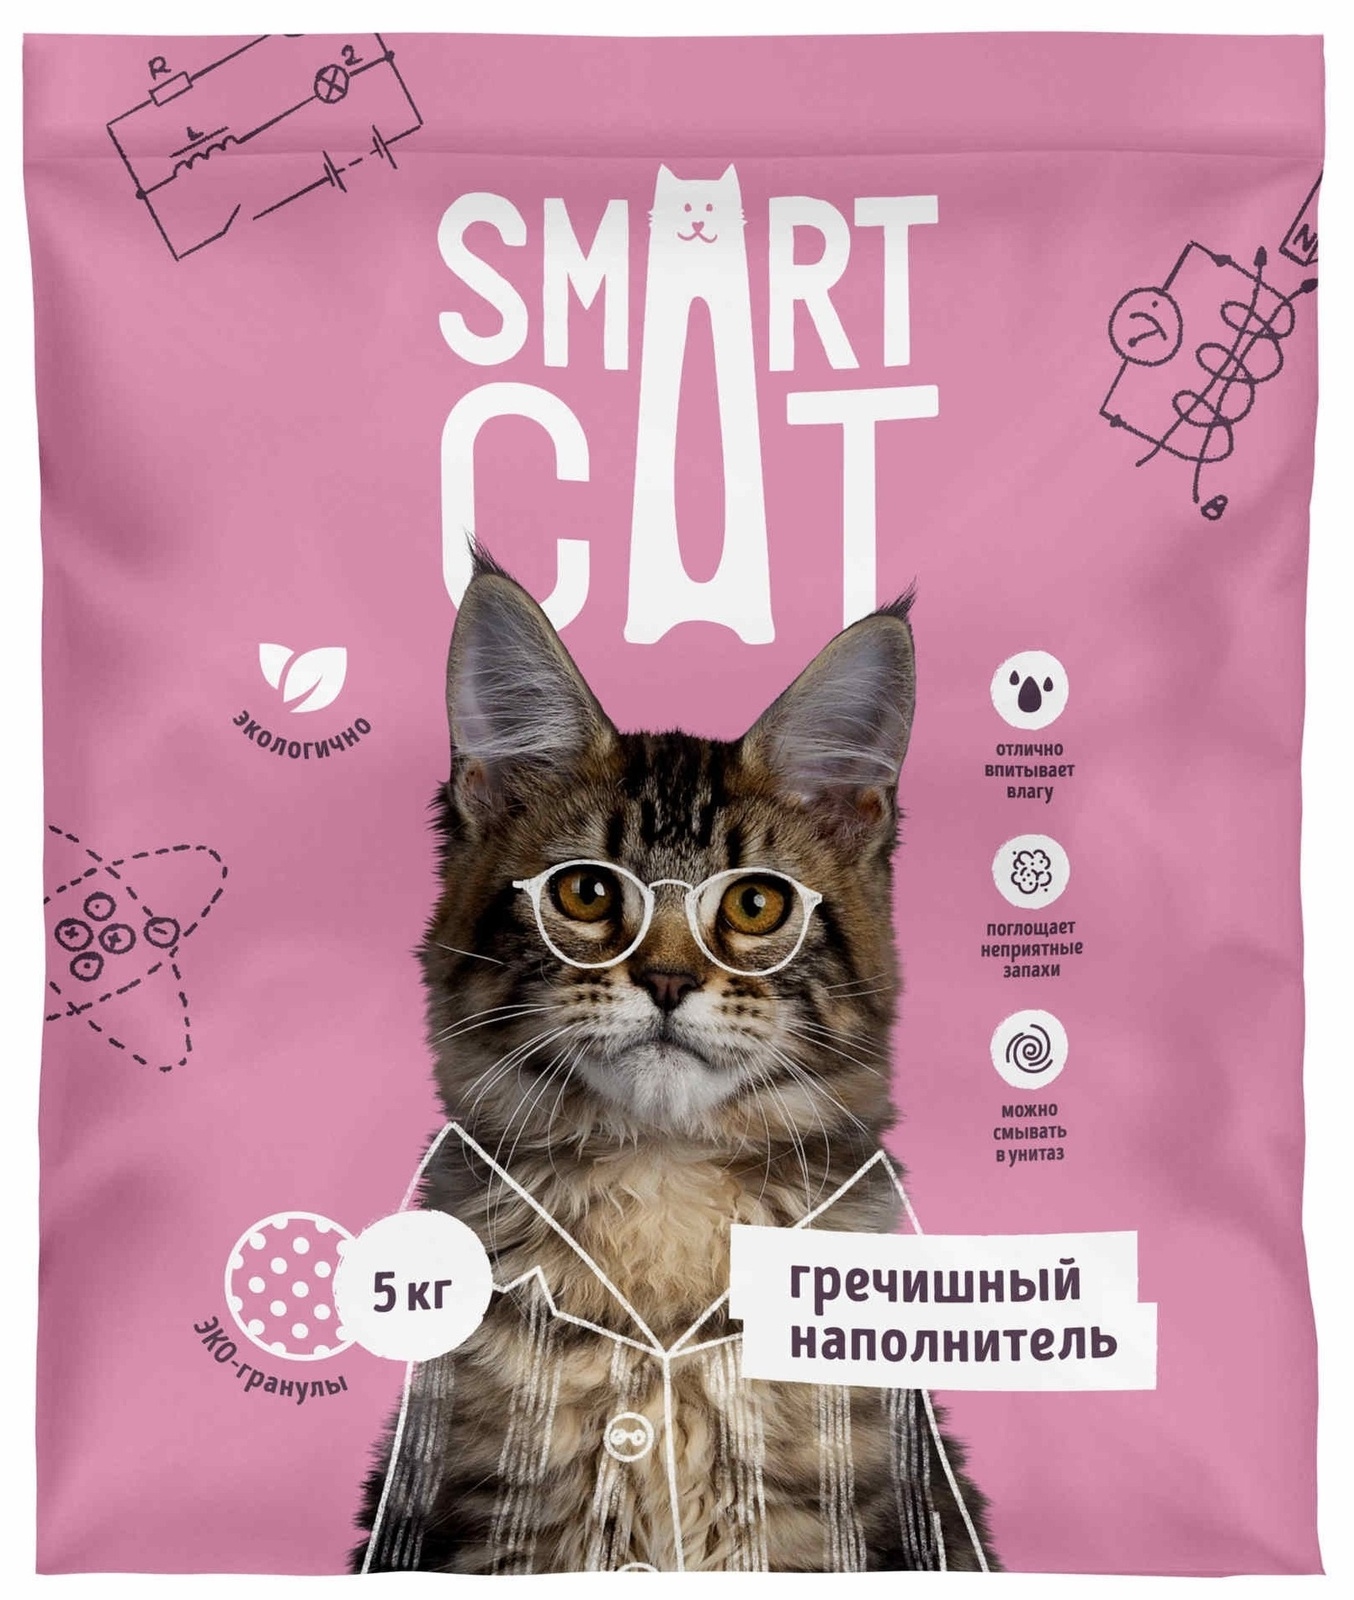 Smart Cat наполнитель Smart Cat наполнитель гречишный наполнитель (5 кг) smart cat наполнитель smart cat наполнитель древесный наполнитель пеллеты 6мм 10 кг